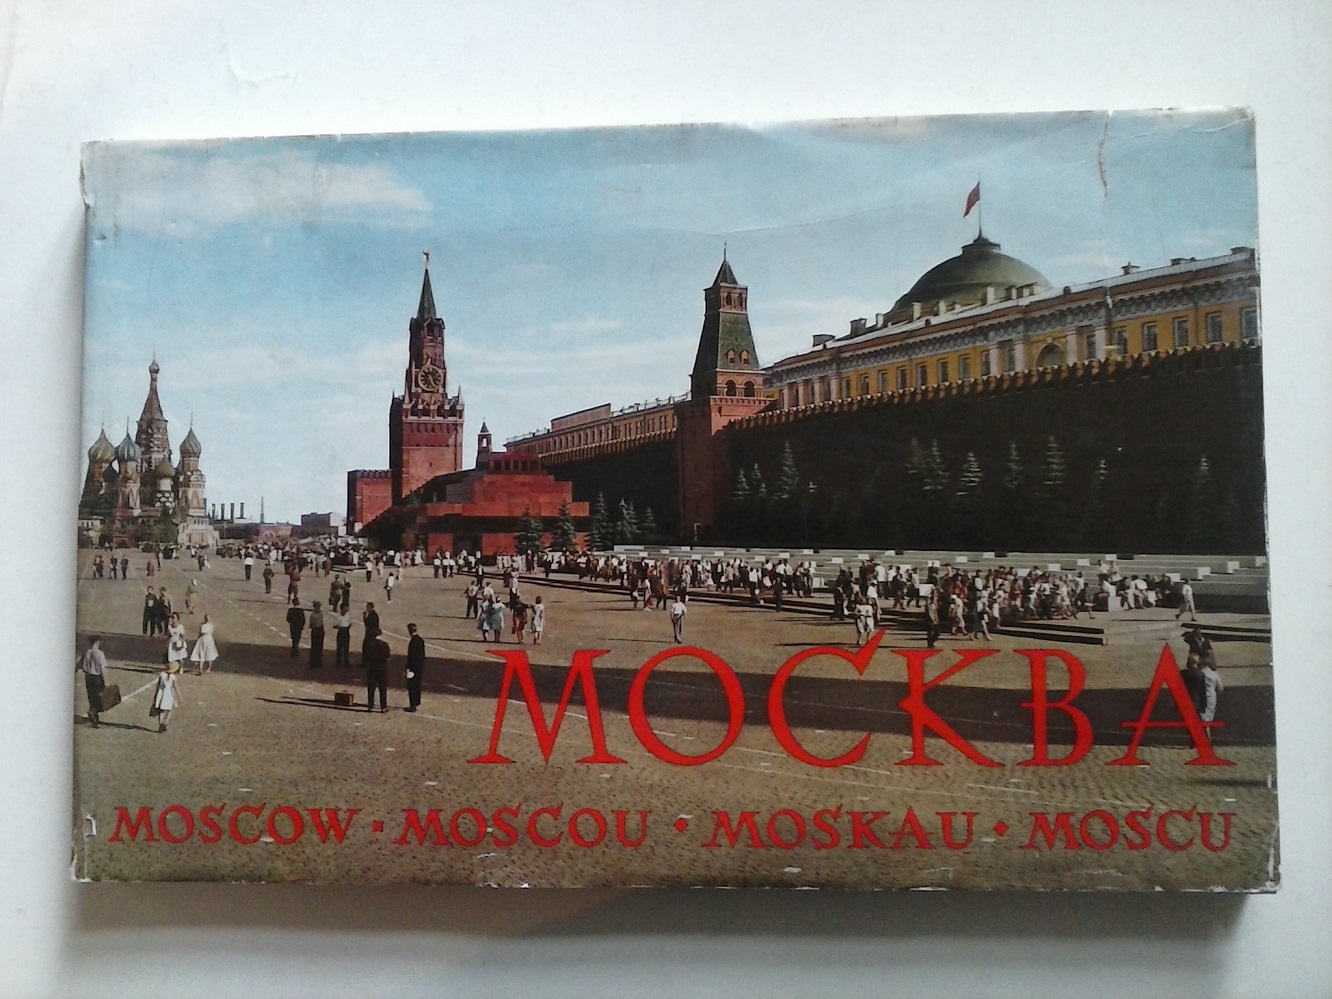   Mockba - Moscow - Moscou - Moskau - Moscu. (Fotoalbom Moskwa). 